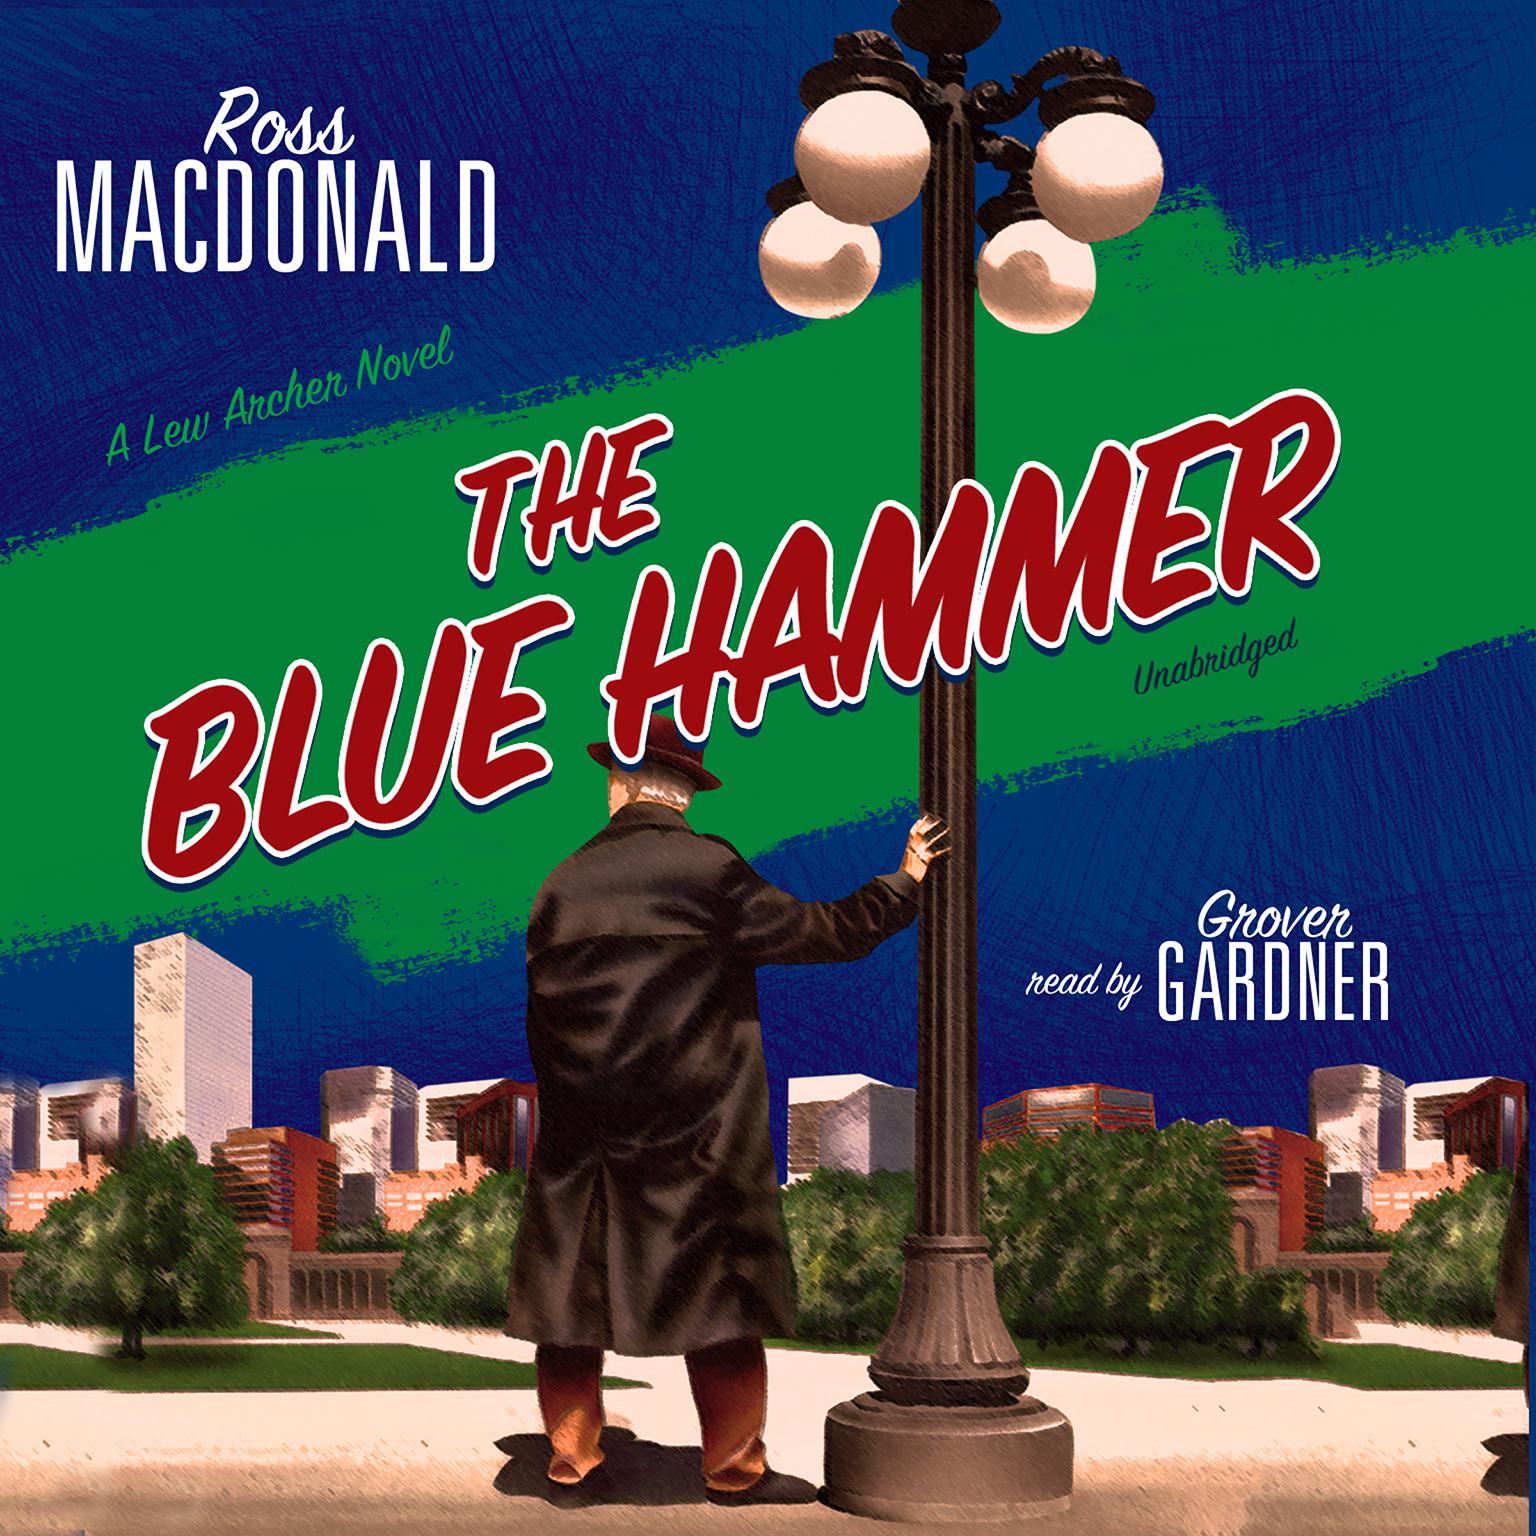 The Blue Hammer: A Lew Archer Novel Audiobook, by Ross Macdonald